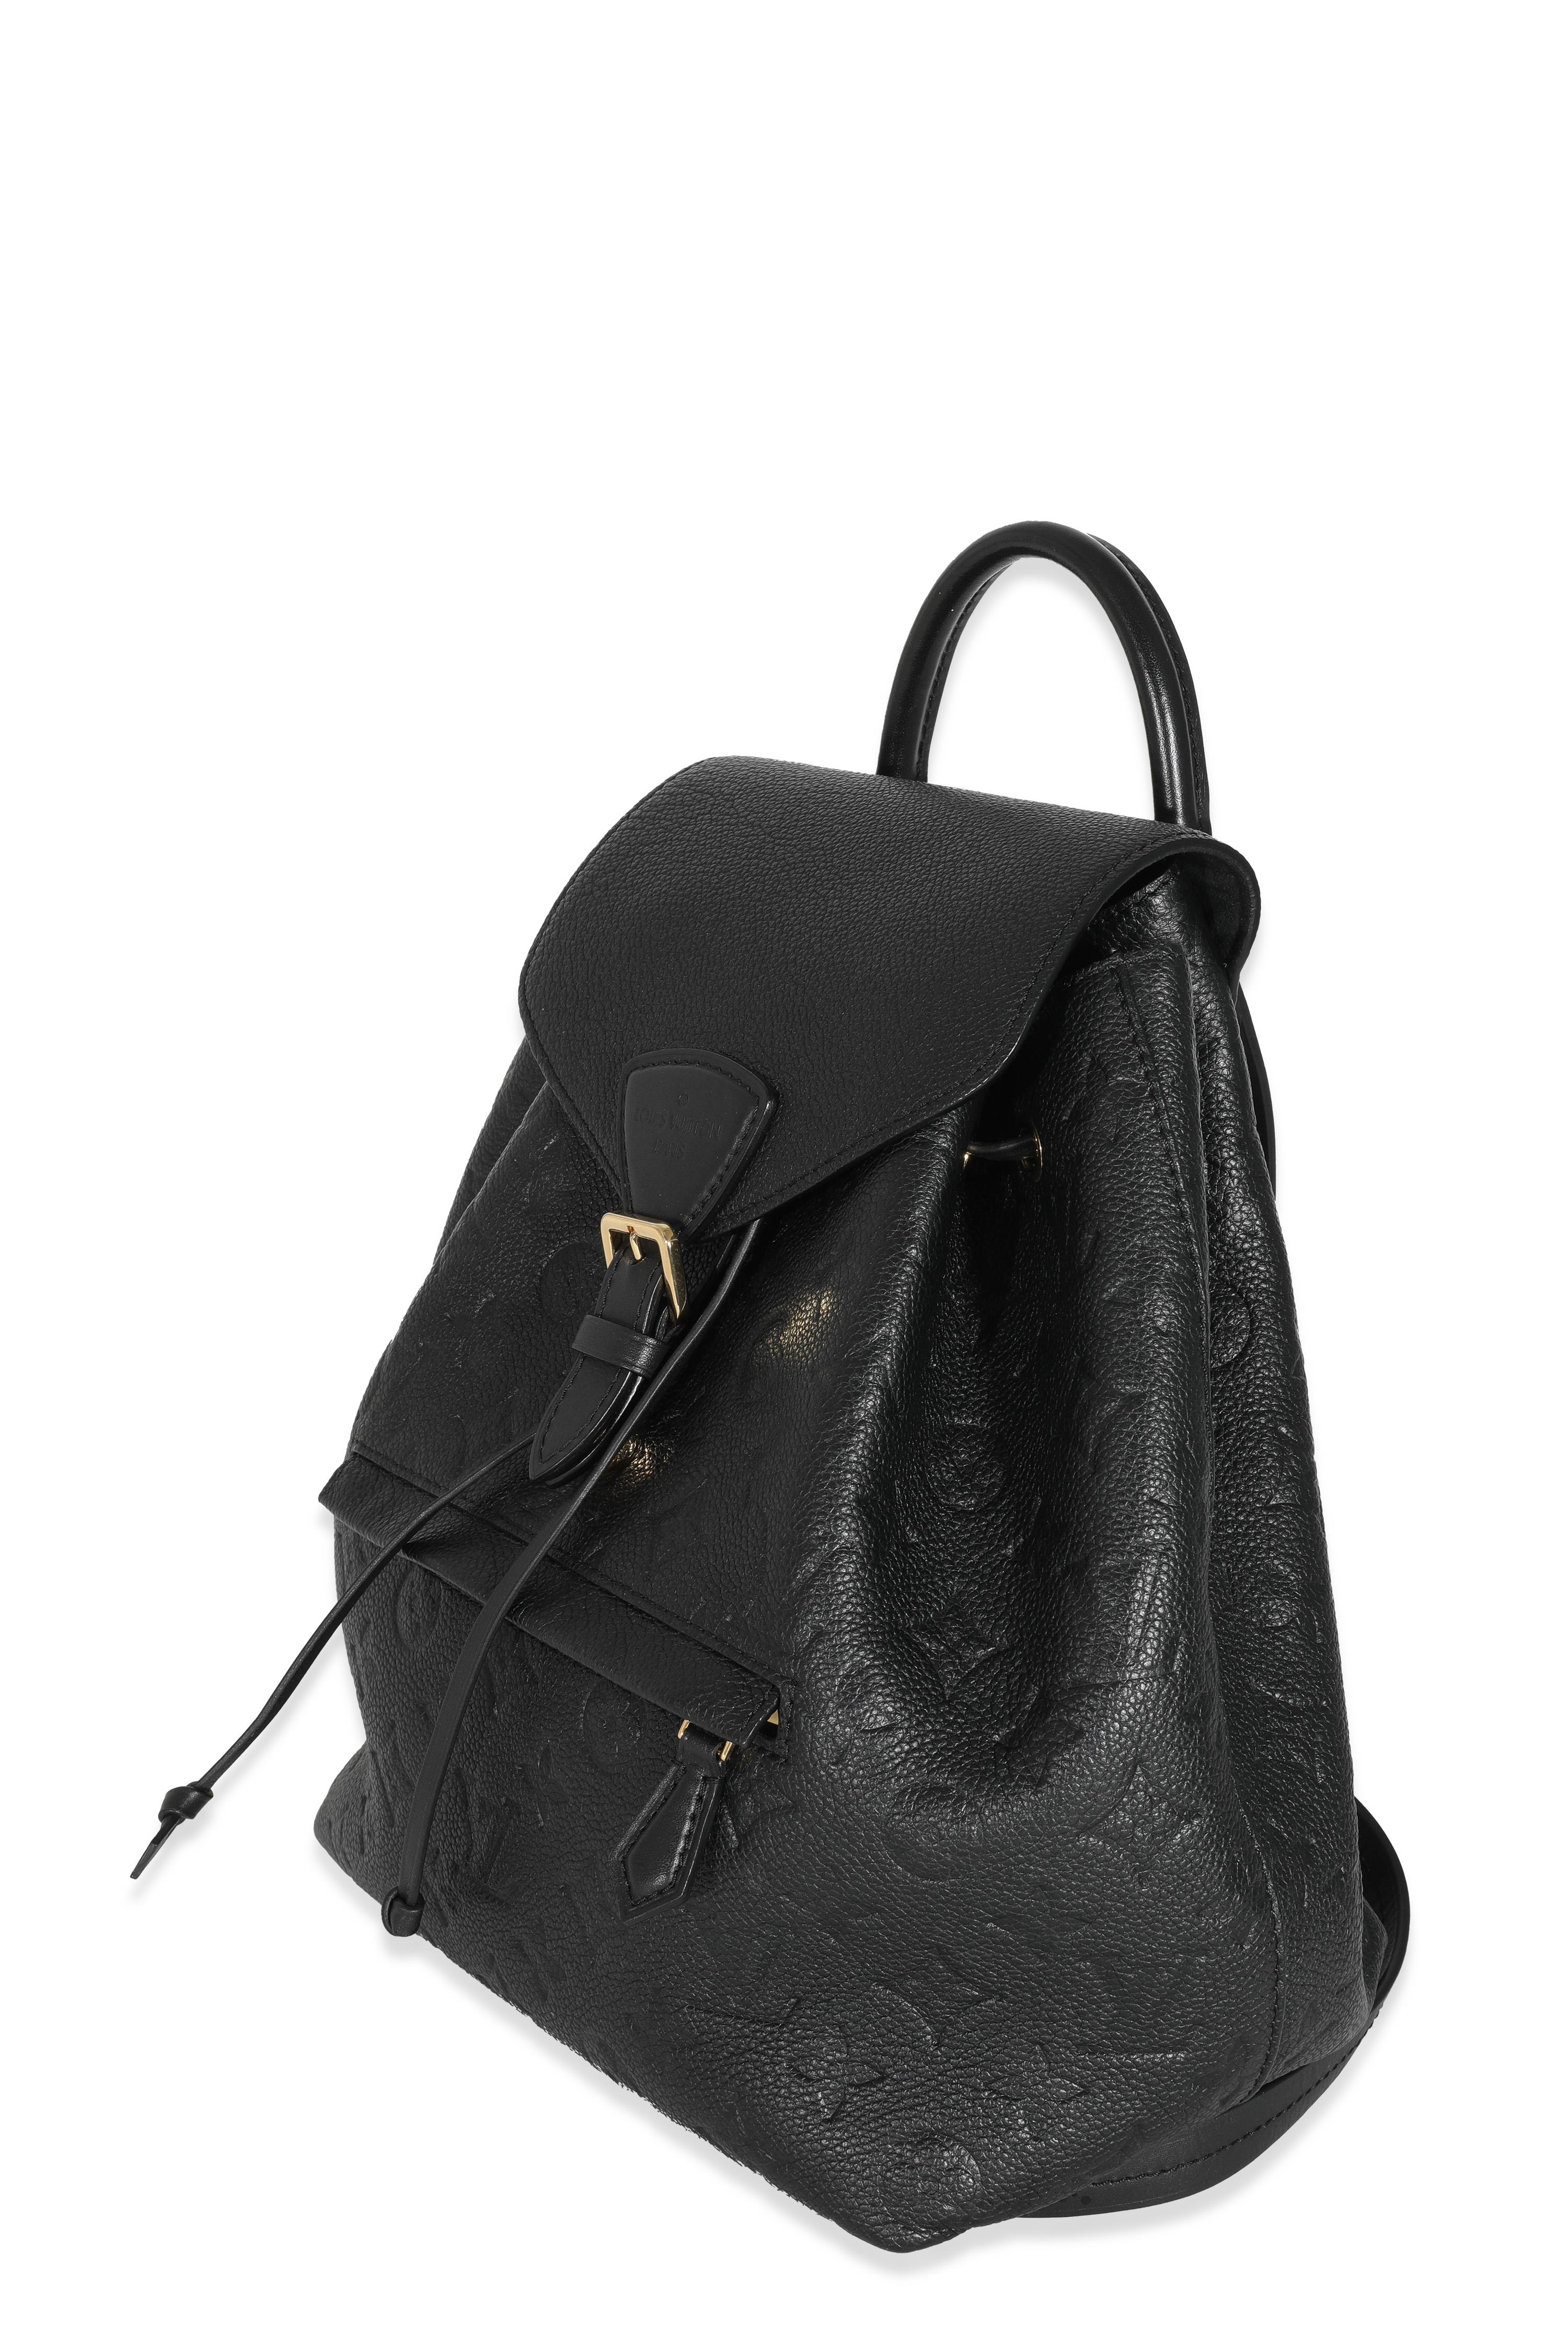 Louis Vuitton Black Monogram Empreinte Montsouris Backpack 3